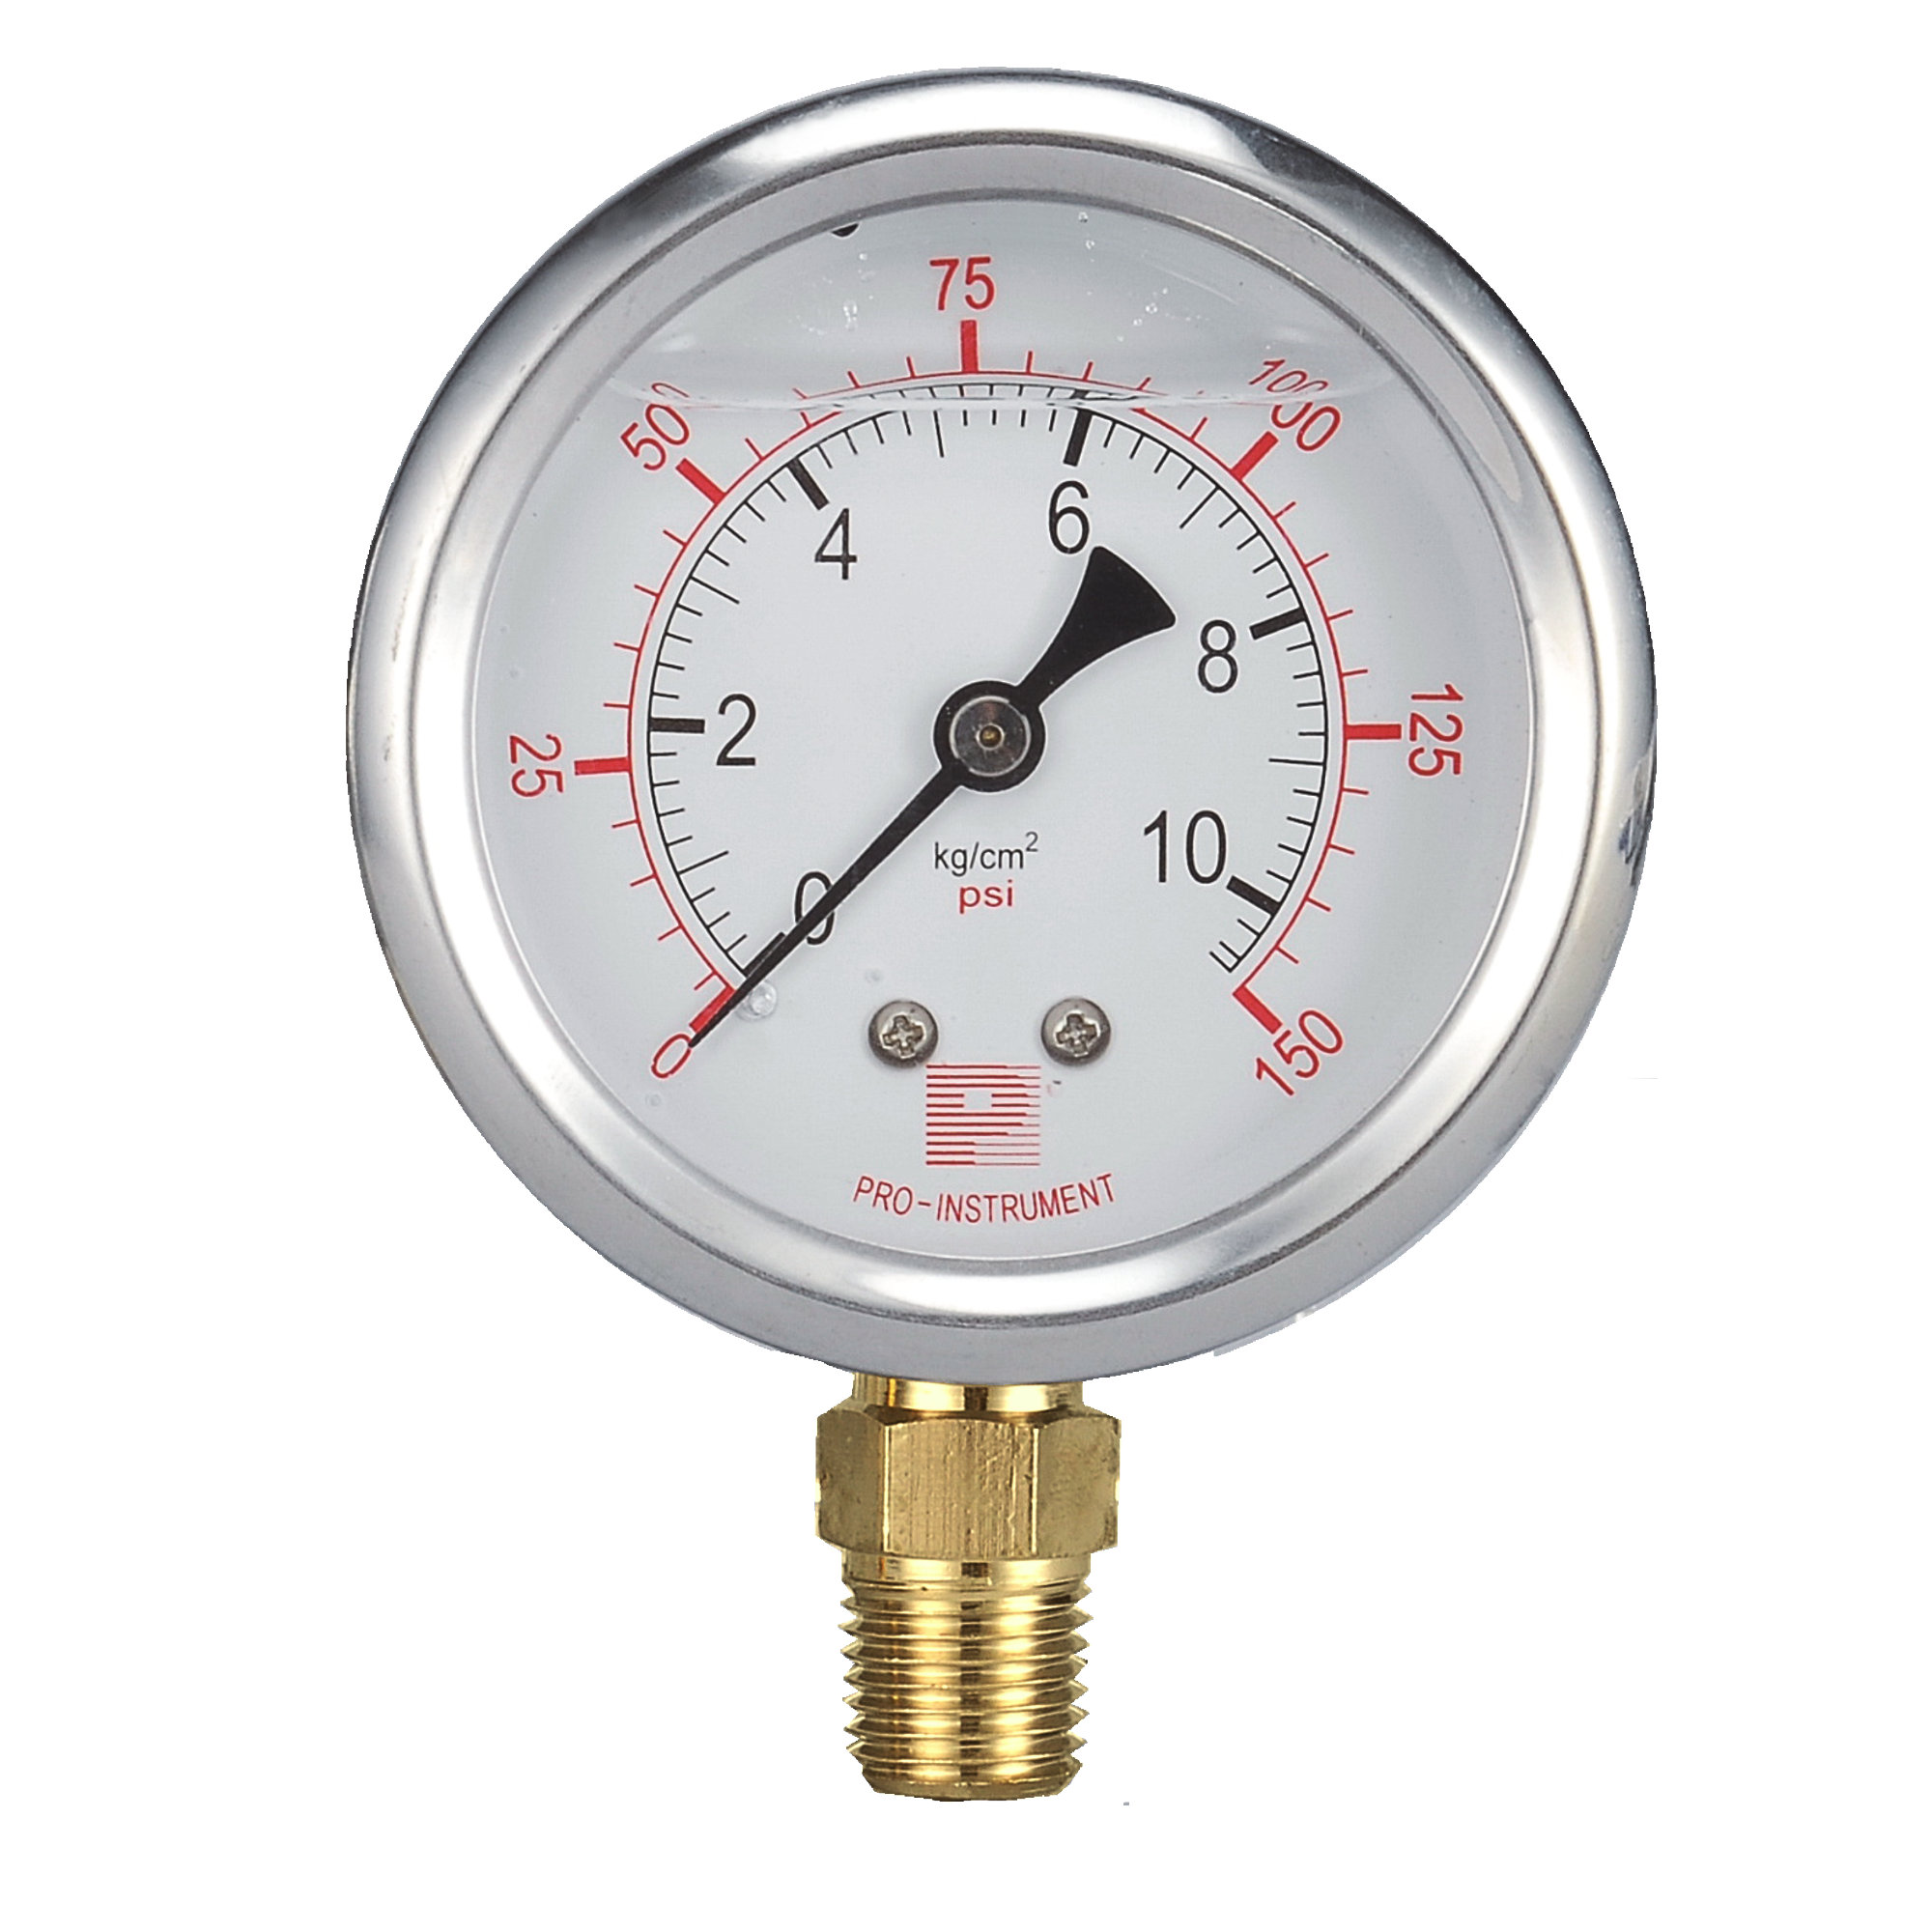 liquid filled, bottom connection pressure gauge